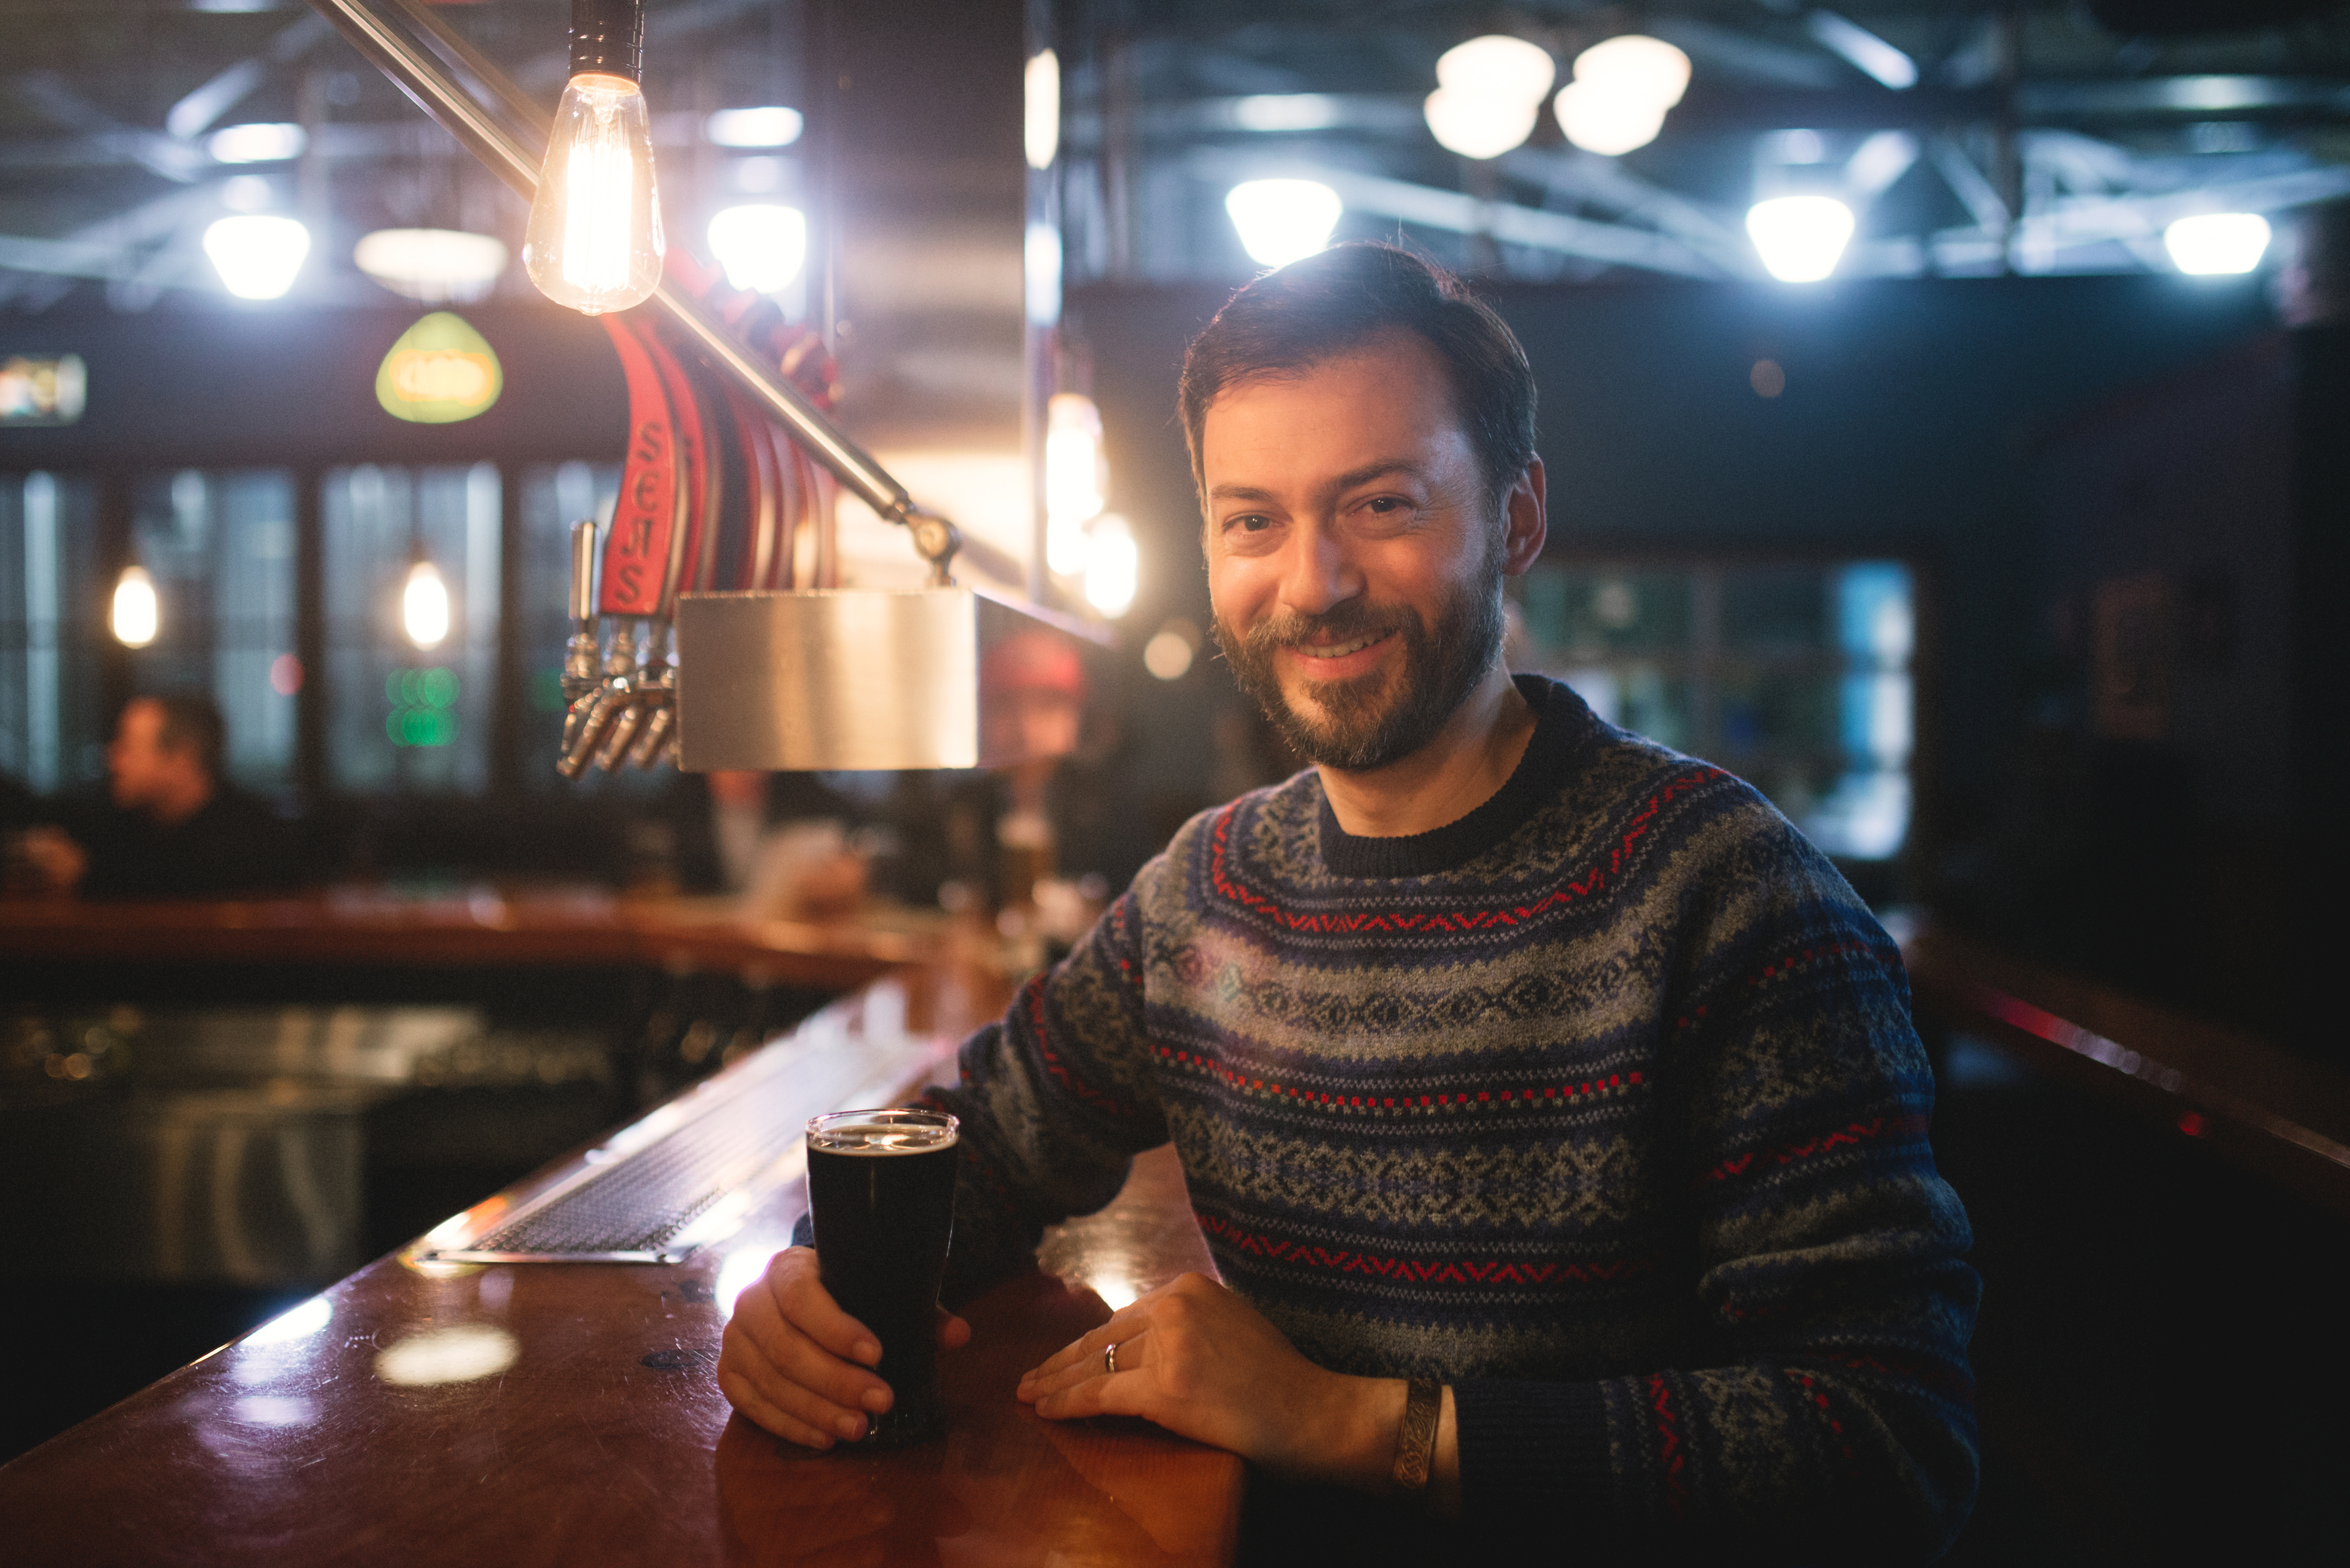 Kelvin Keown: Mastering Beer Styles student shares experience